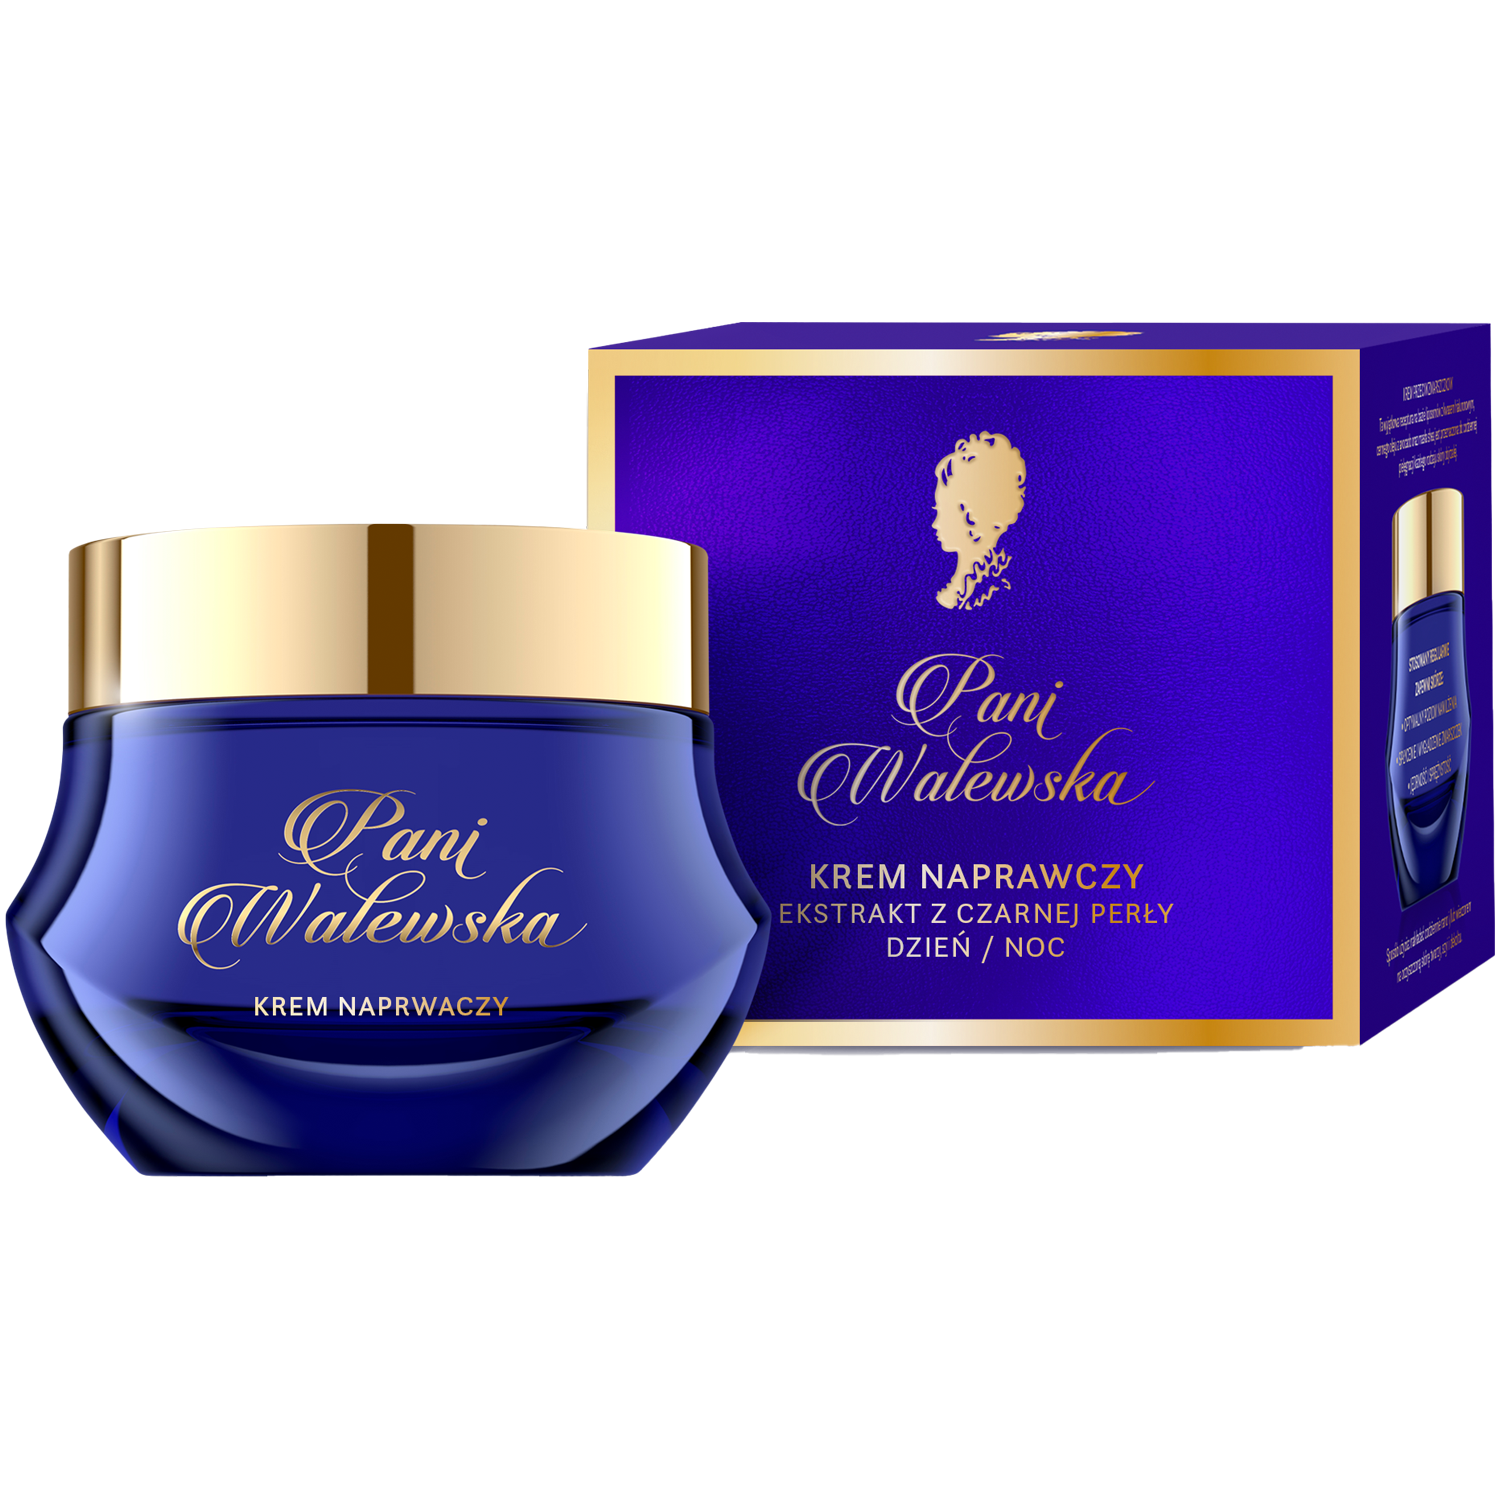 Классический креп. Pani Walewska лого. Pani Walewska Classic Moisturizing Day Cream крем увлажняющий для лица.